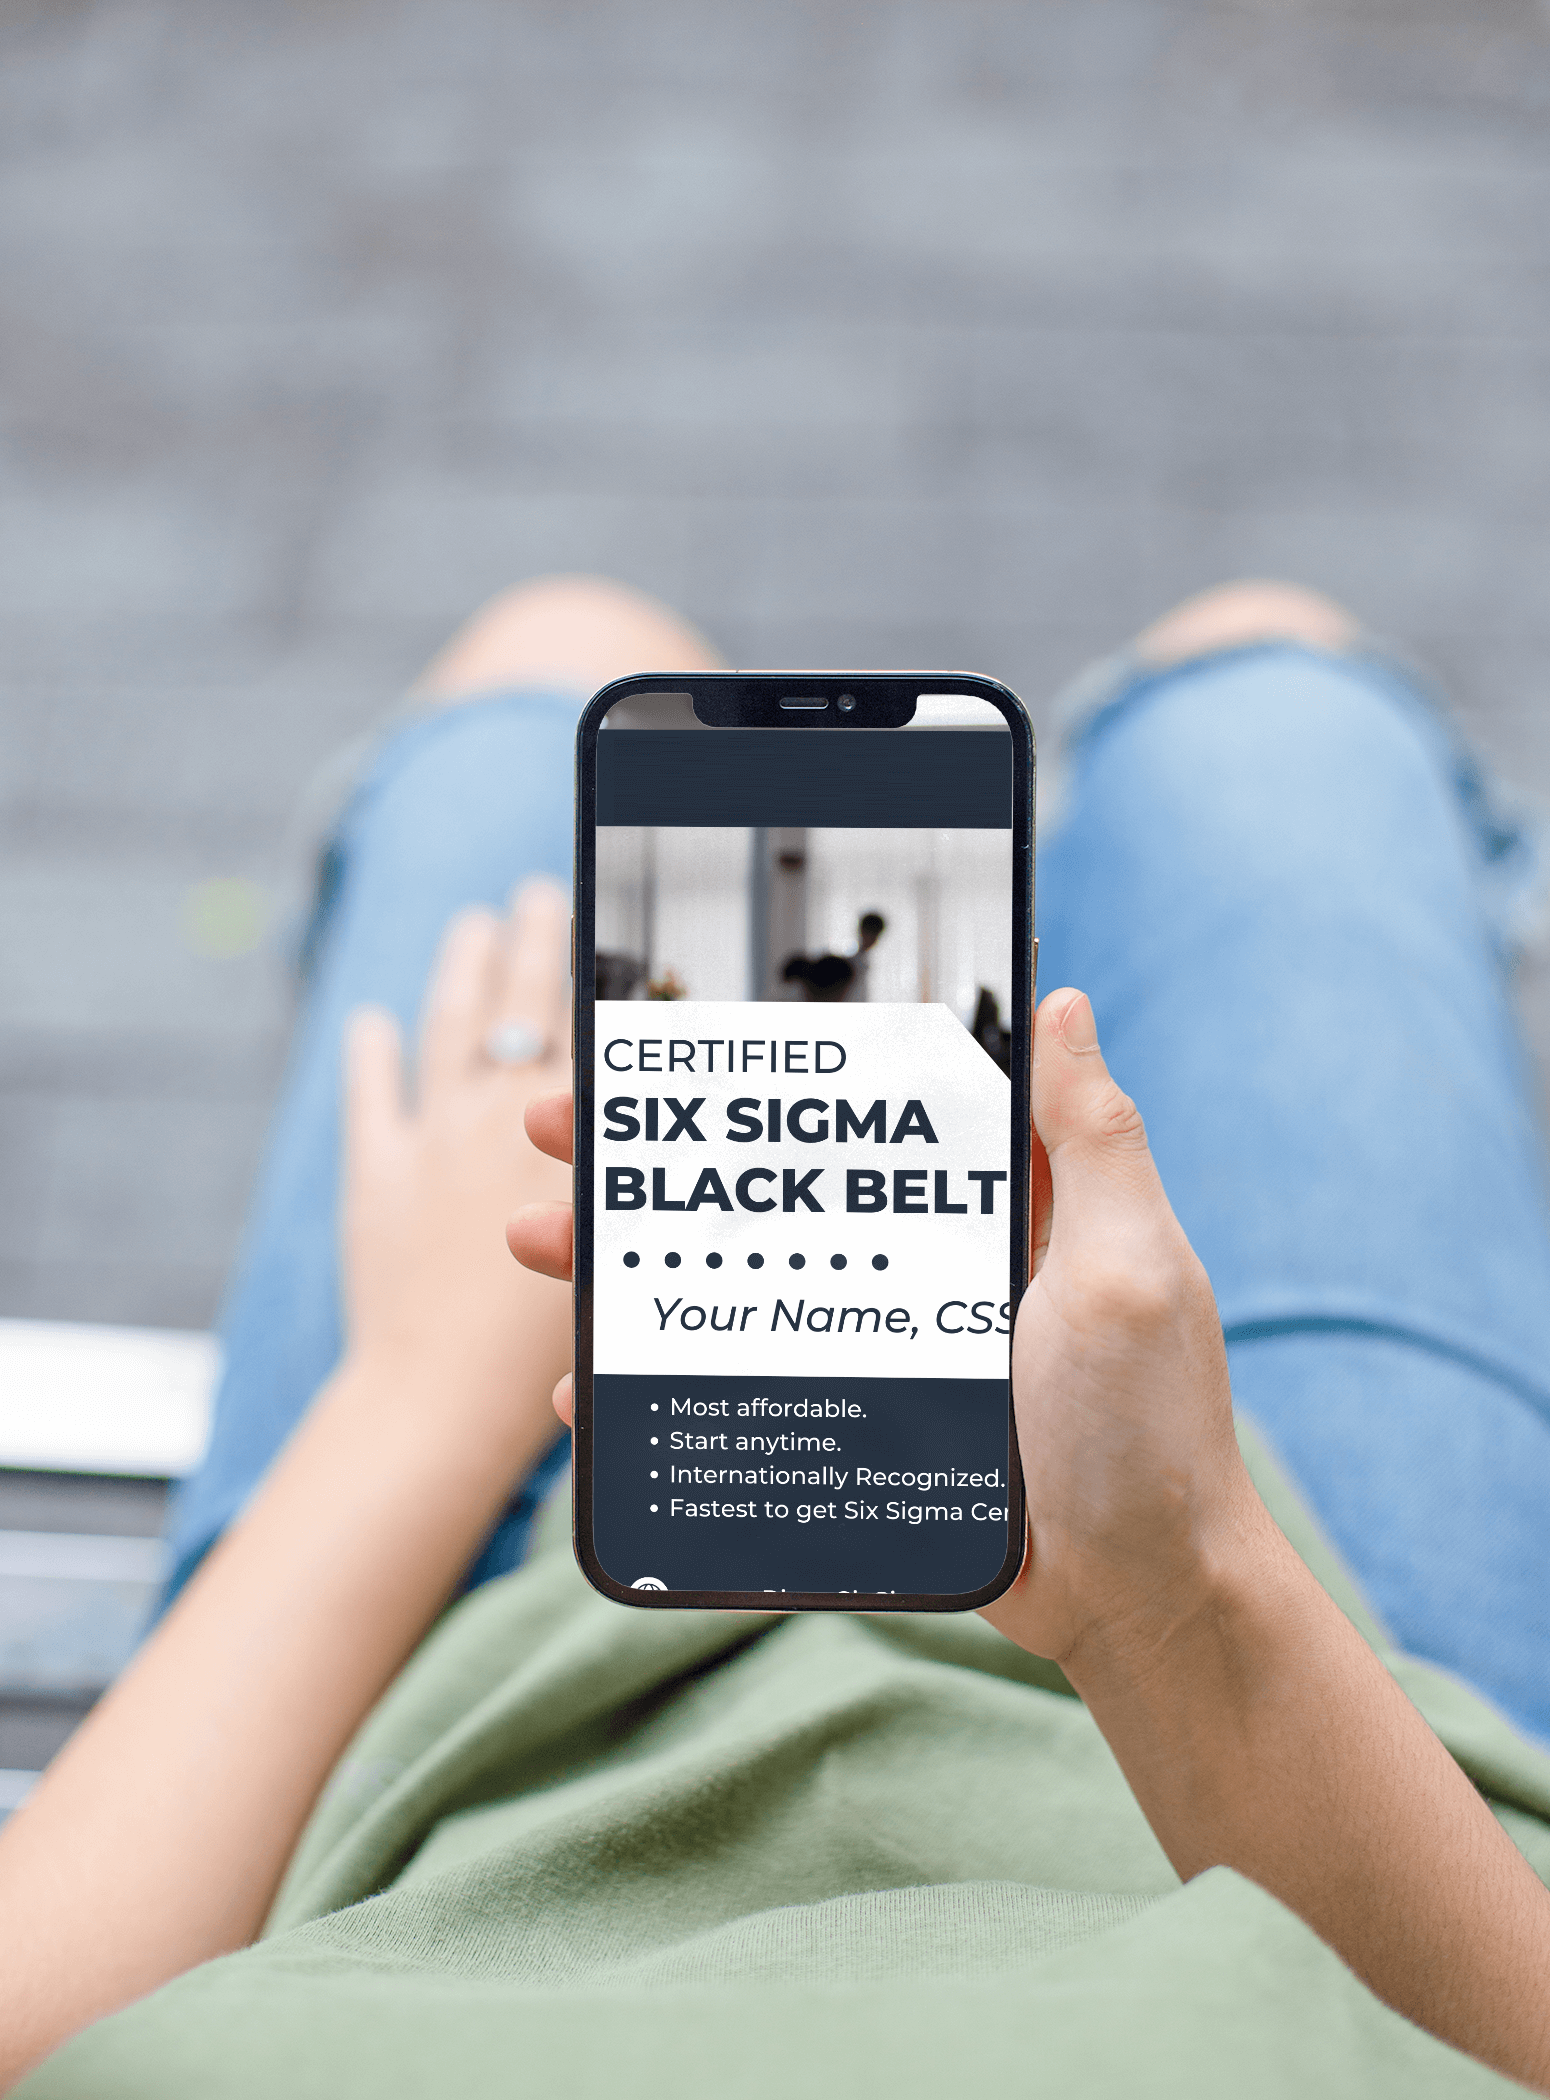 Six Sigma Black Belt Training & Certification